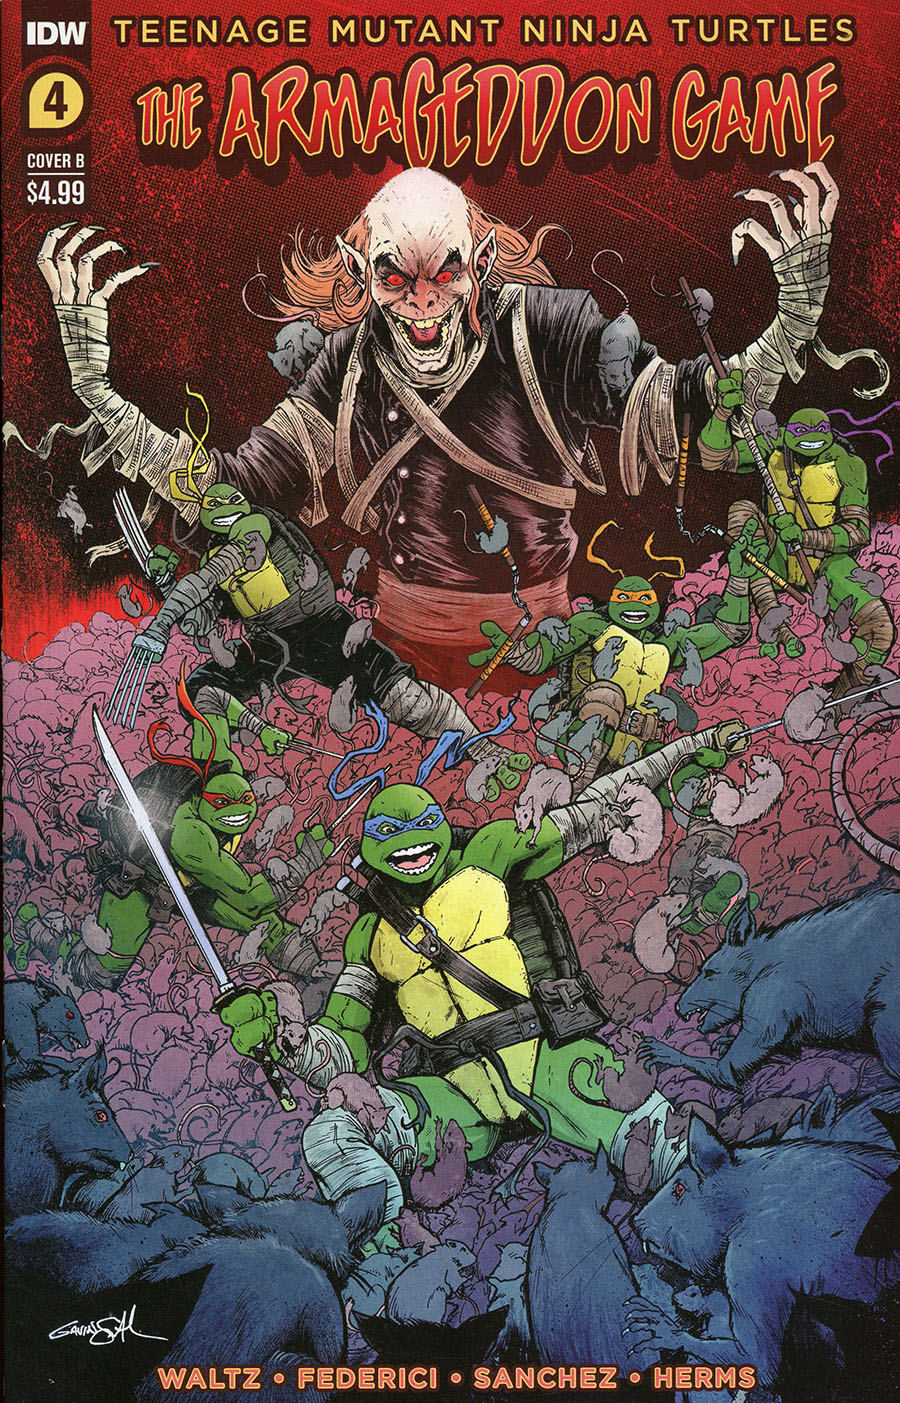 Teenage Mutant Ninja Turtles Armageddon Game #4 Cover B Variant Gavin Smith Cover